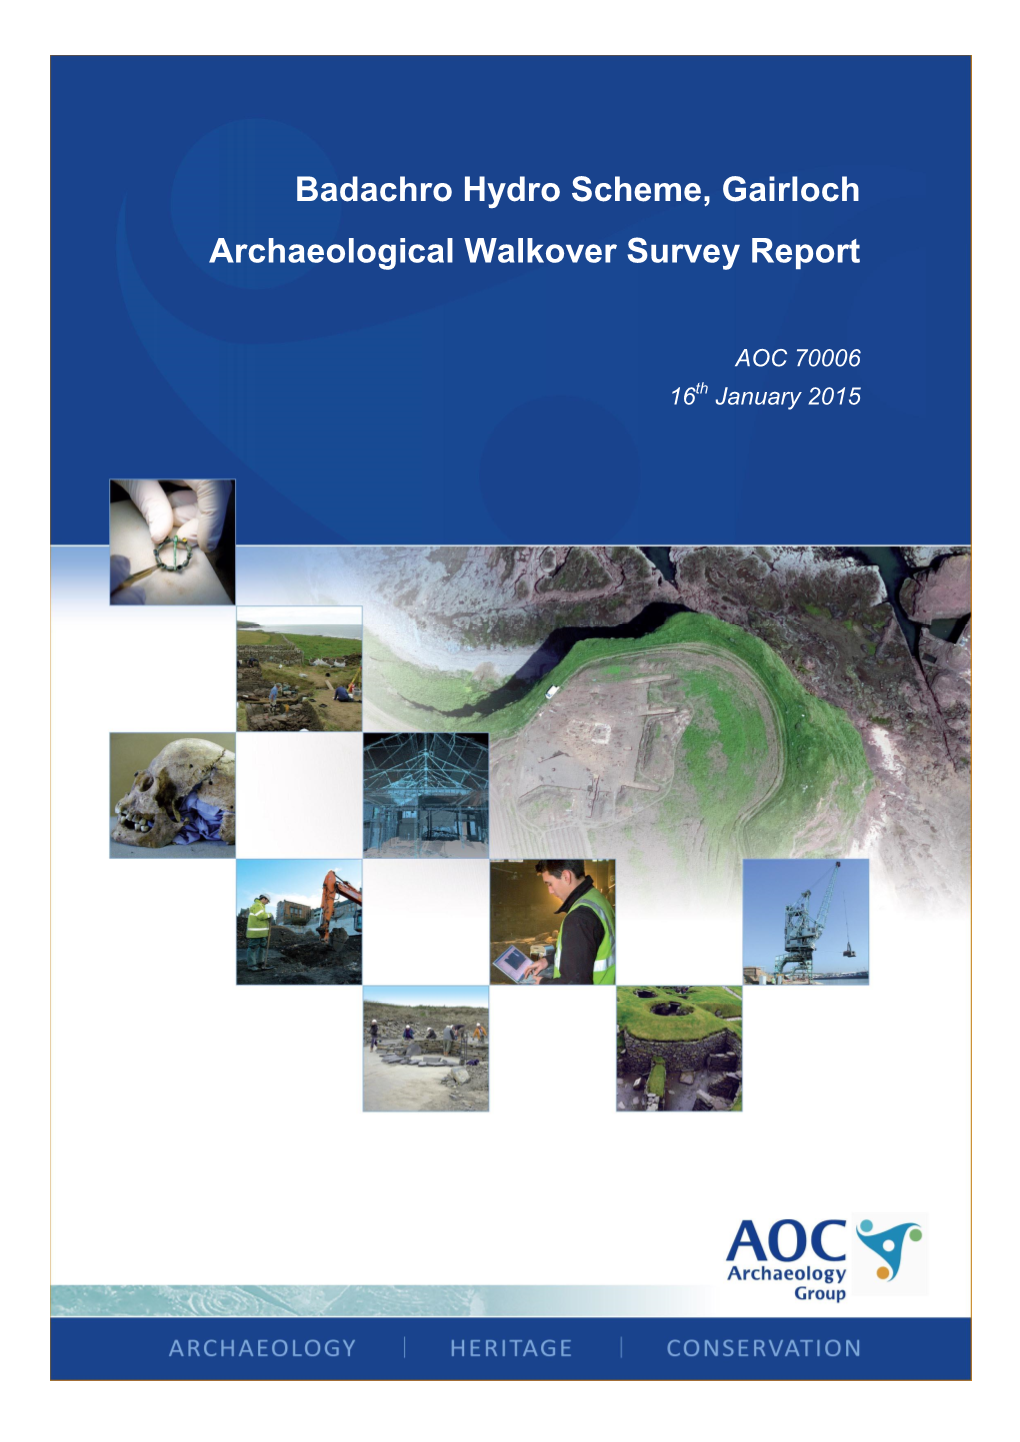 Badachro Hydro Scheme, Gairloch Archaeological Walkover Survey Report